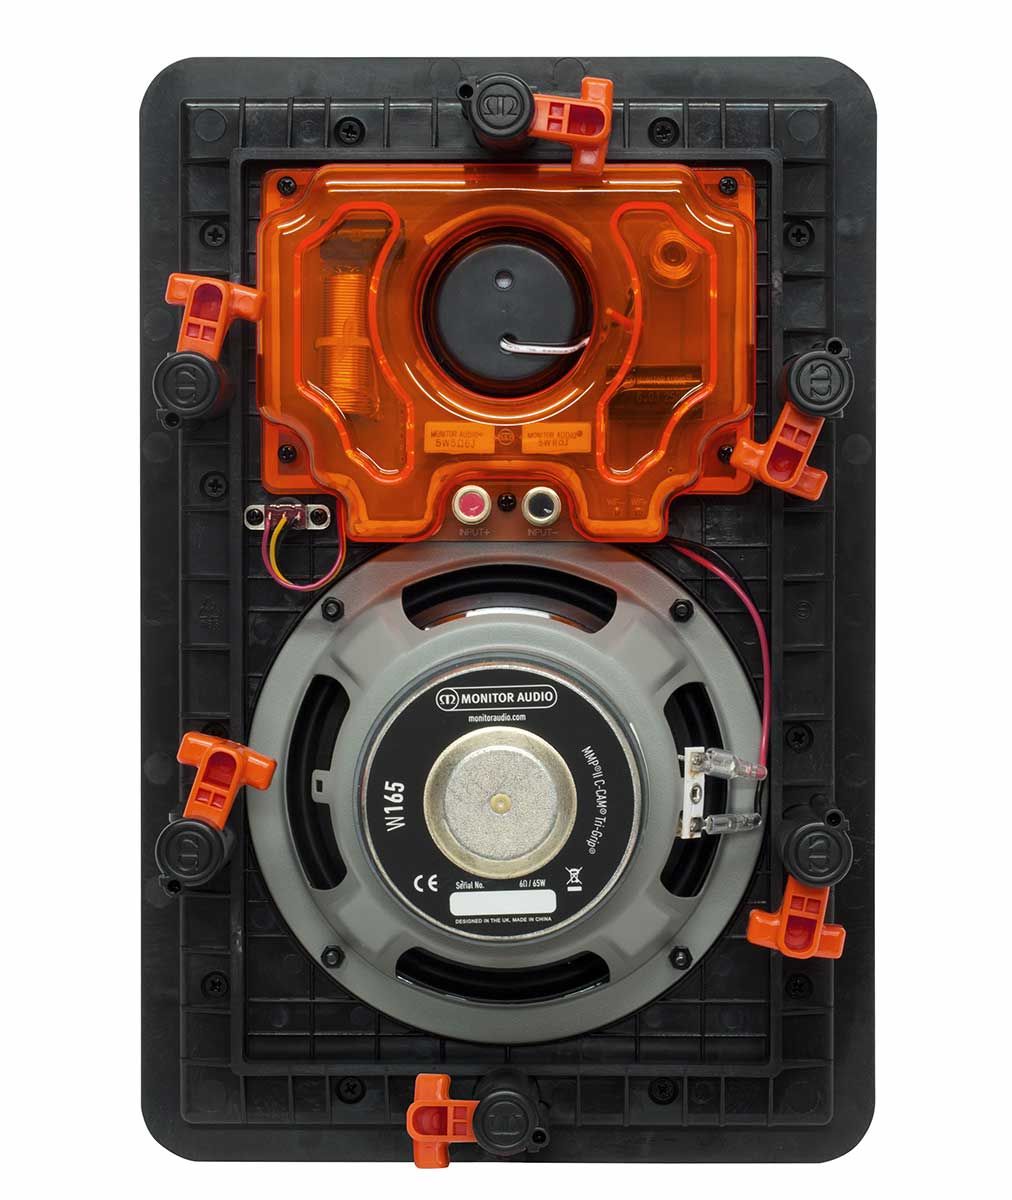 Monitor Audio W165 Series 100 In-Wall Speaker, rear view